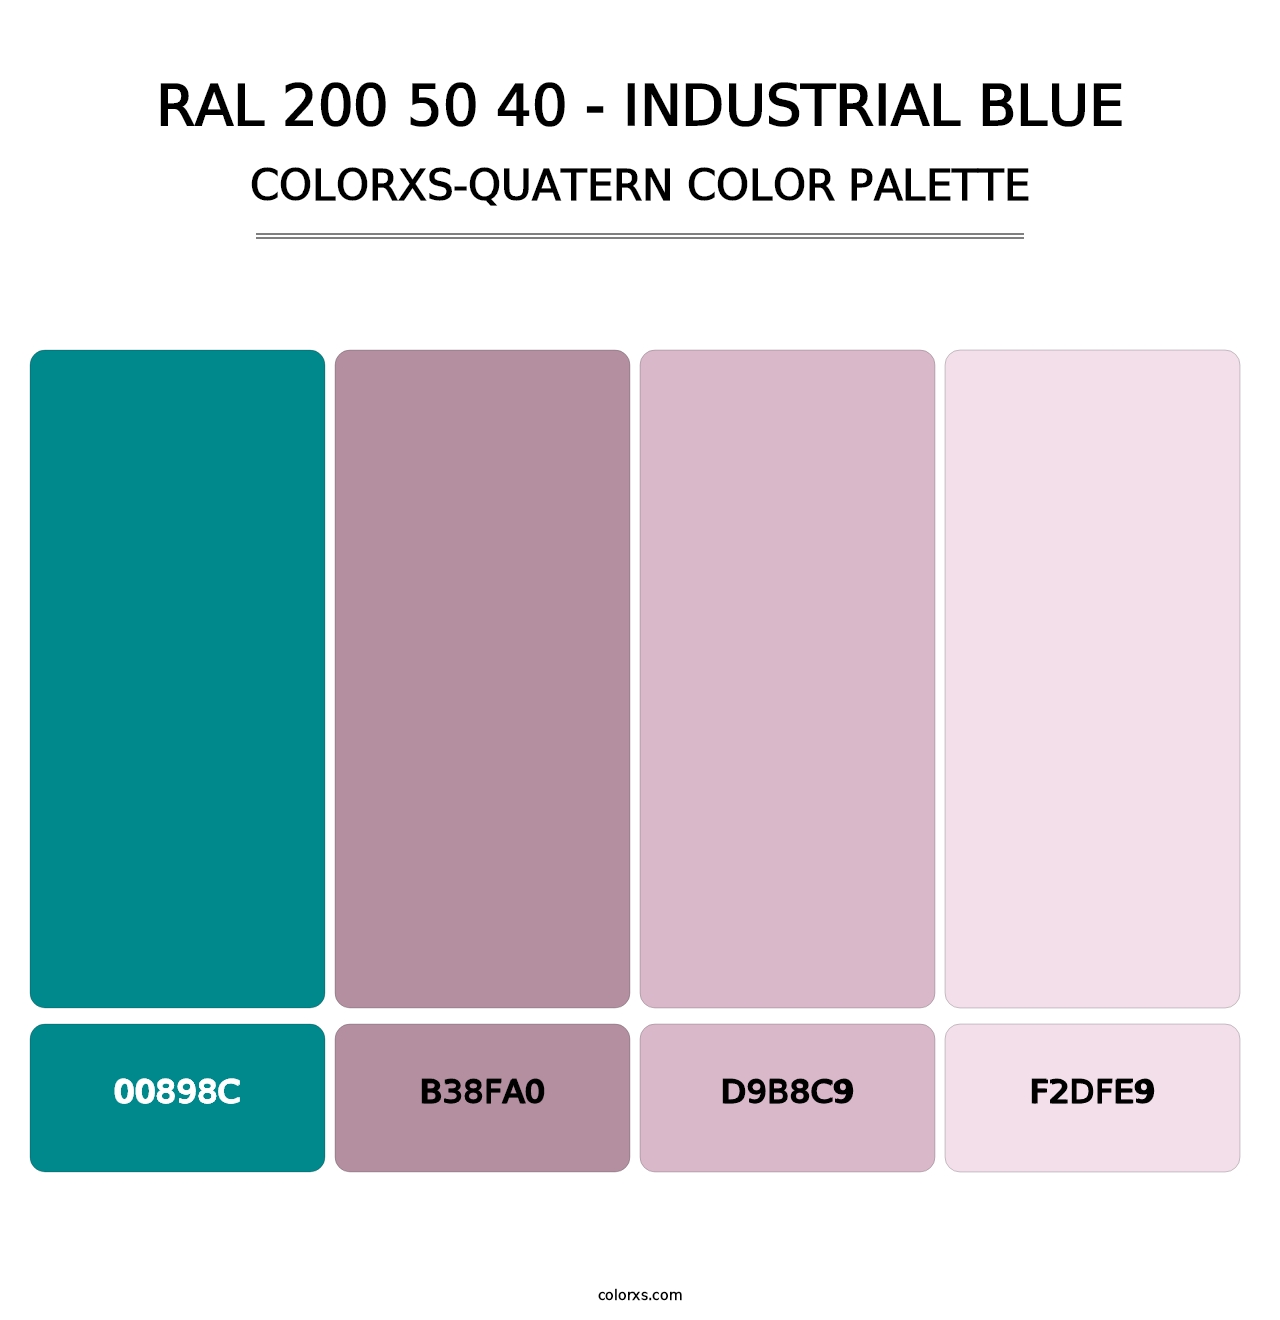 RAL 200 50 40 - Industrial Blue - Colorxs Quatern Palette